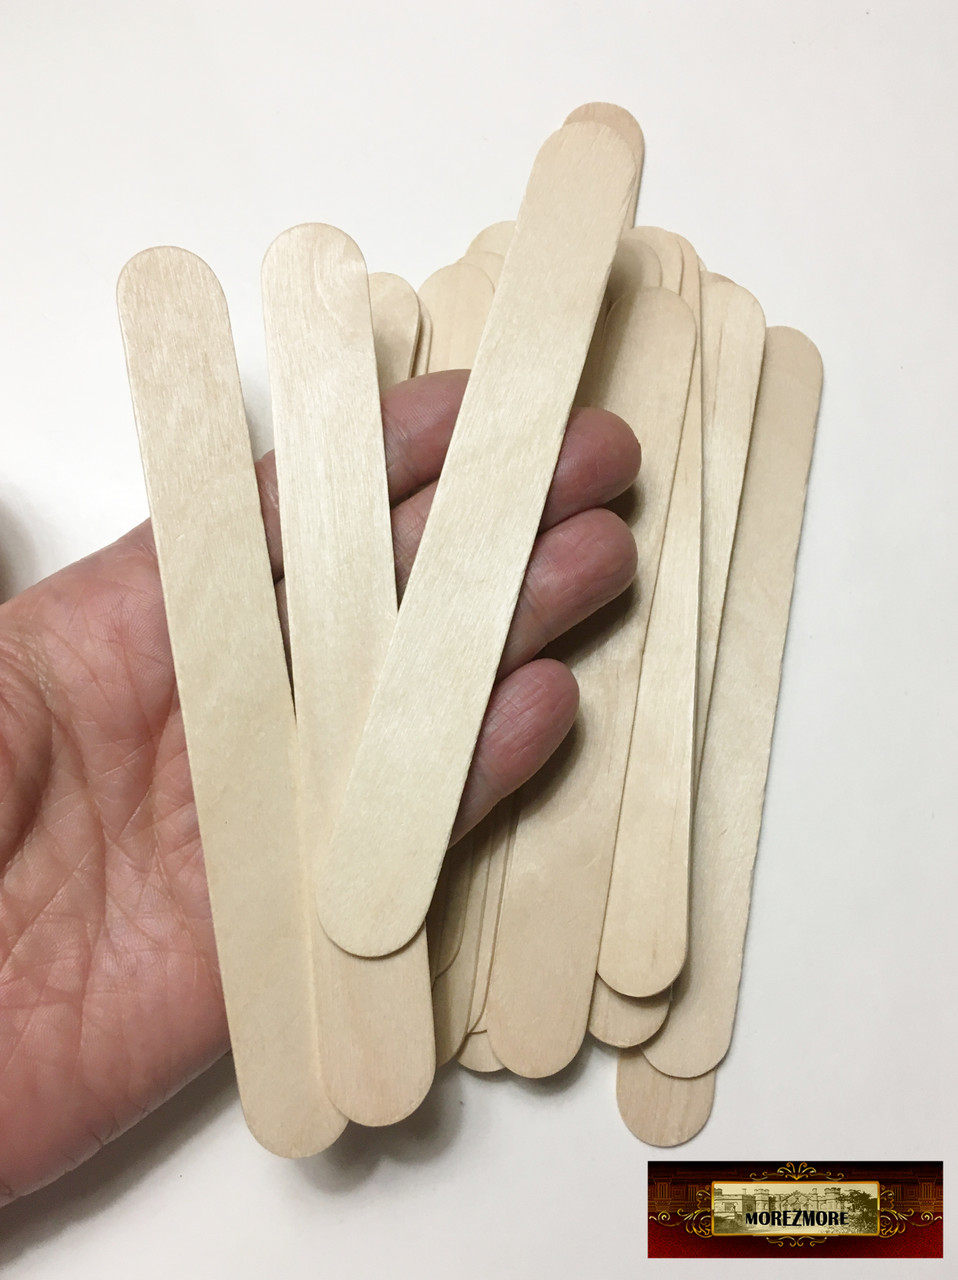 M01238 MOREZMORE 25 Large Jumbo 6 x 3/4 Popsicle Sticks Wooden